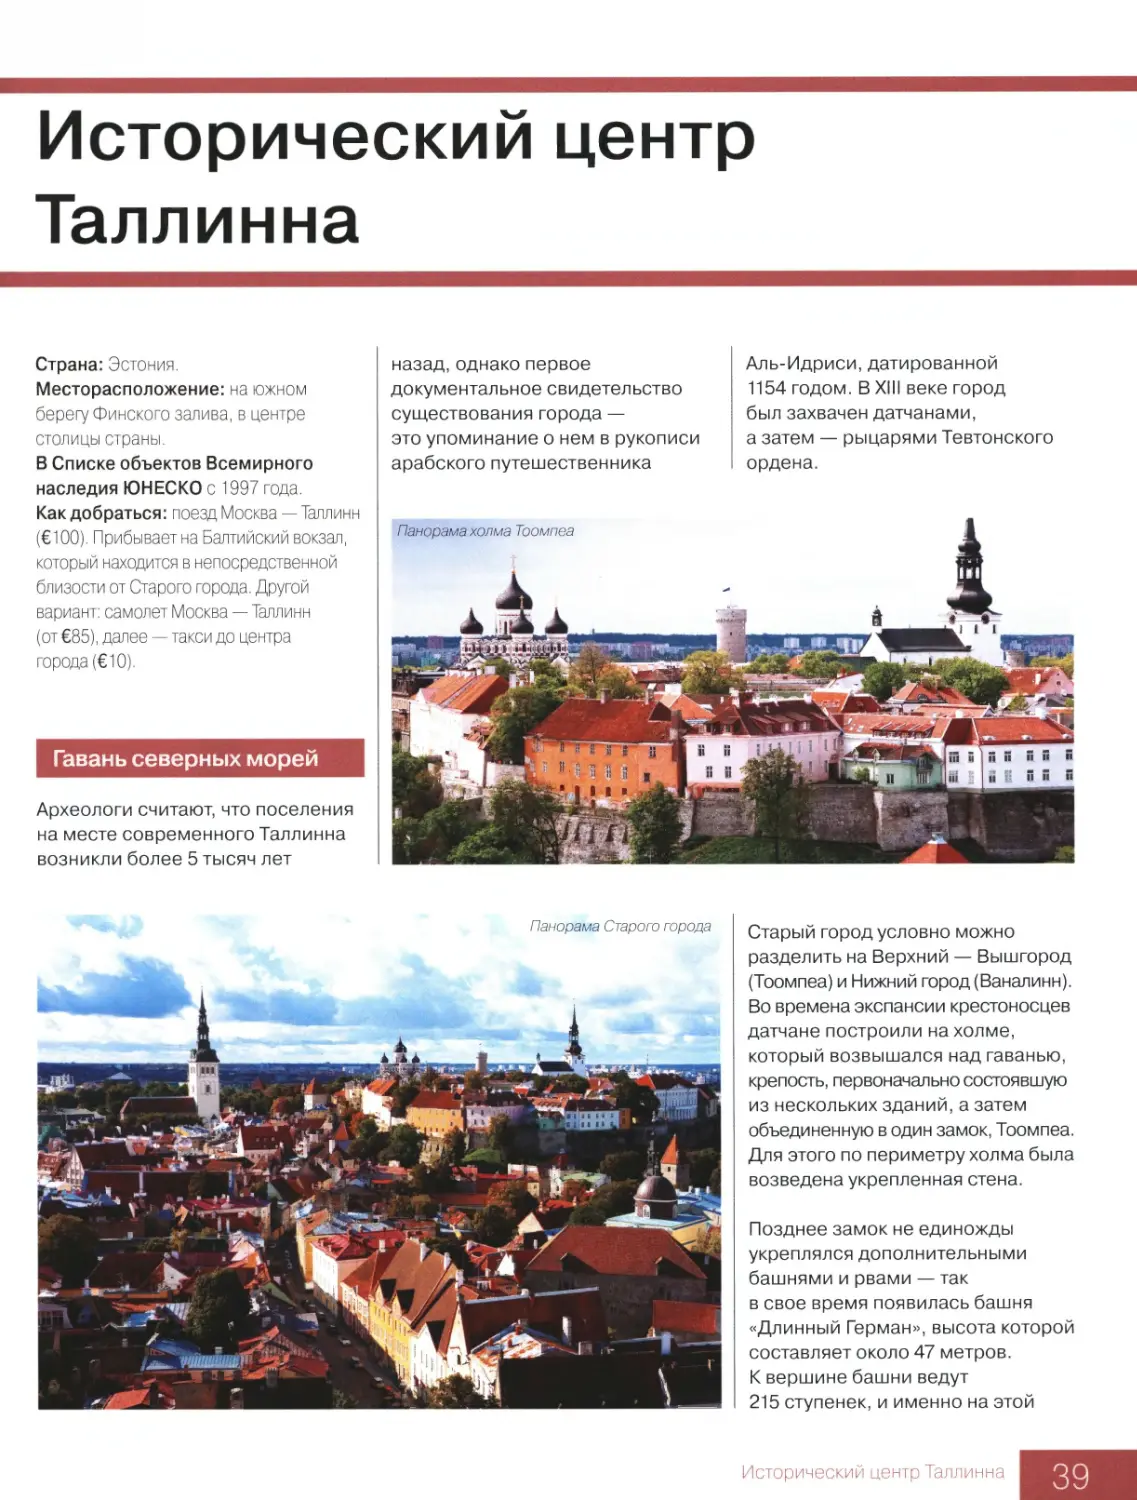 Исторический центр Таллинна